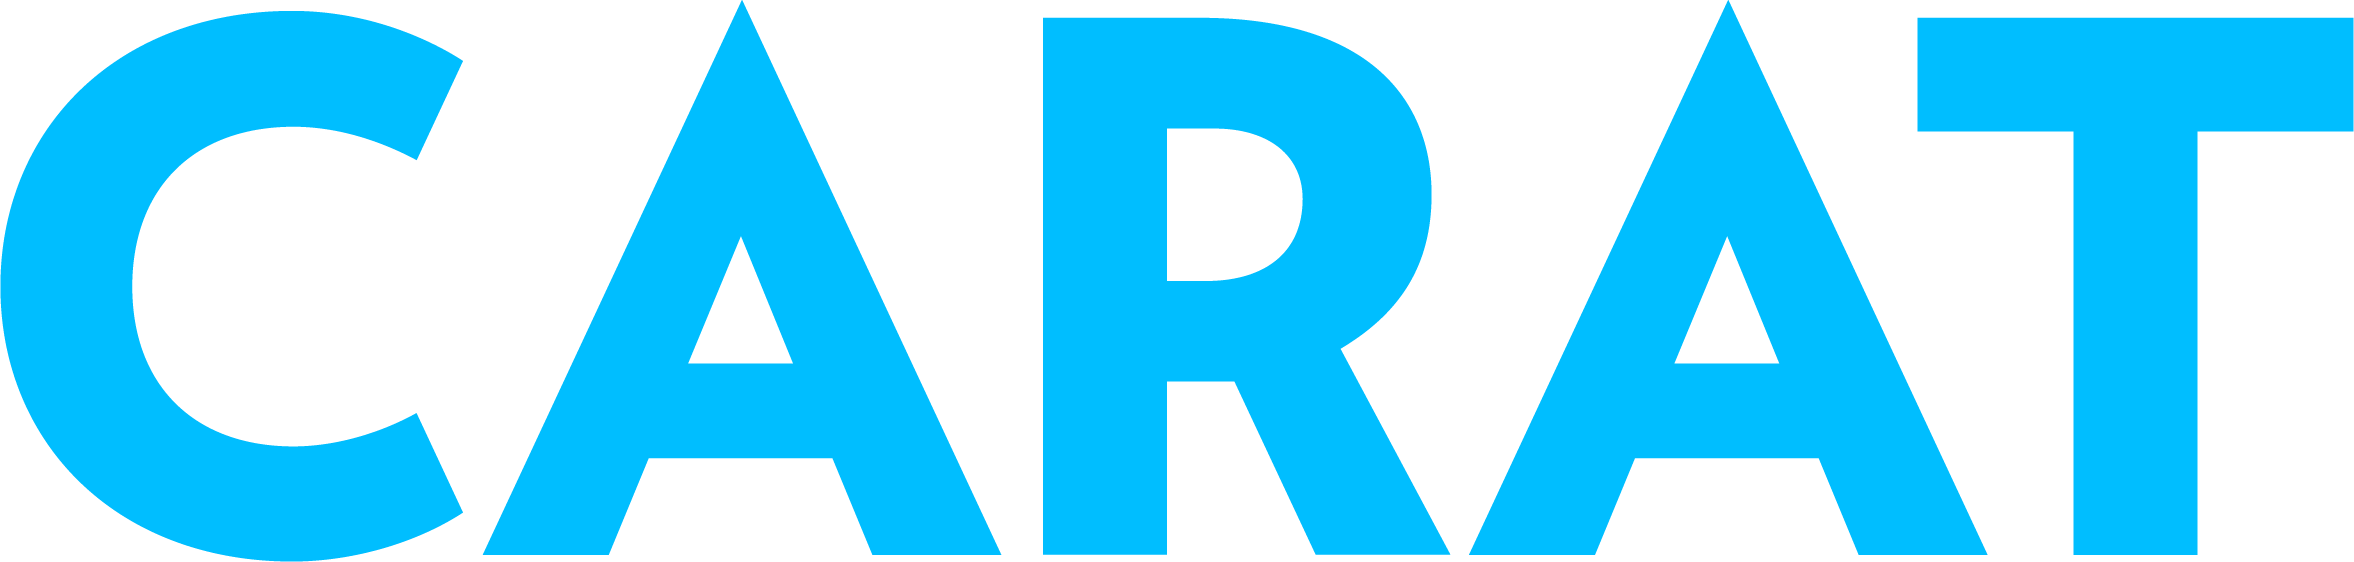 Carat Logo - Dentsu Aegis Network